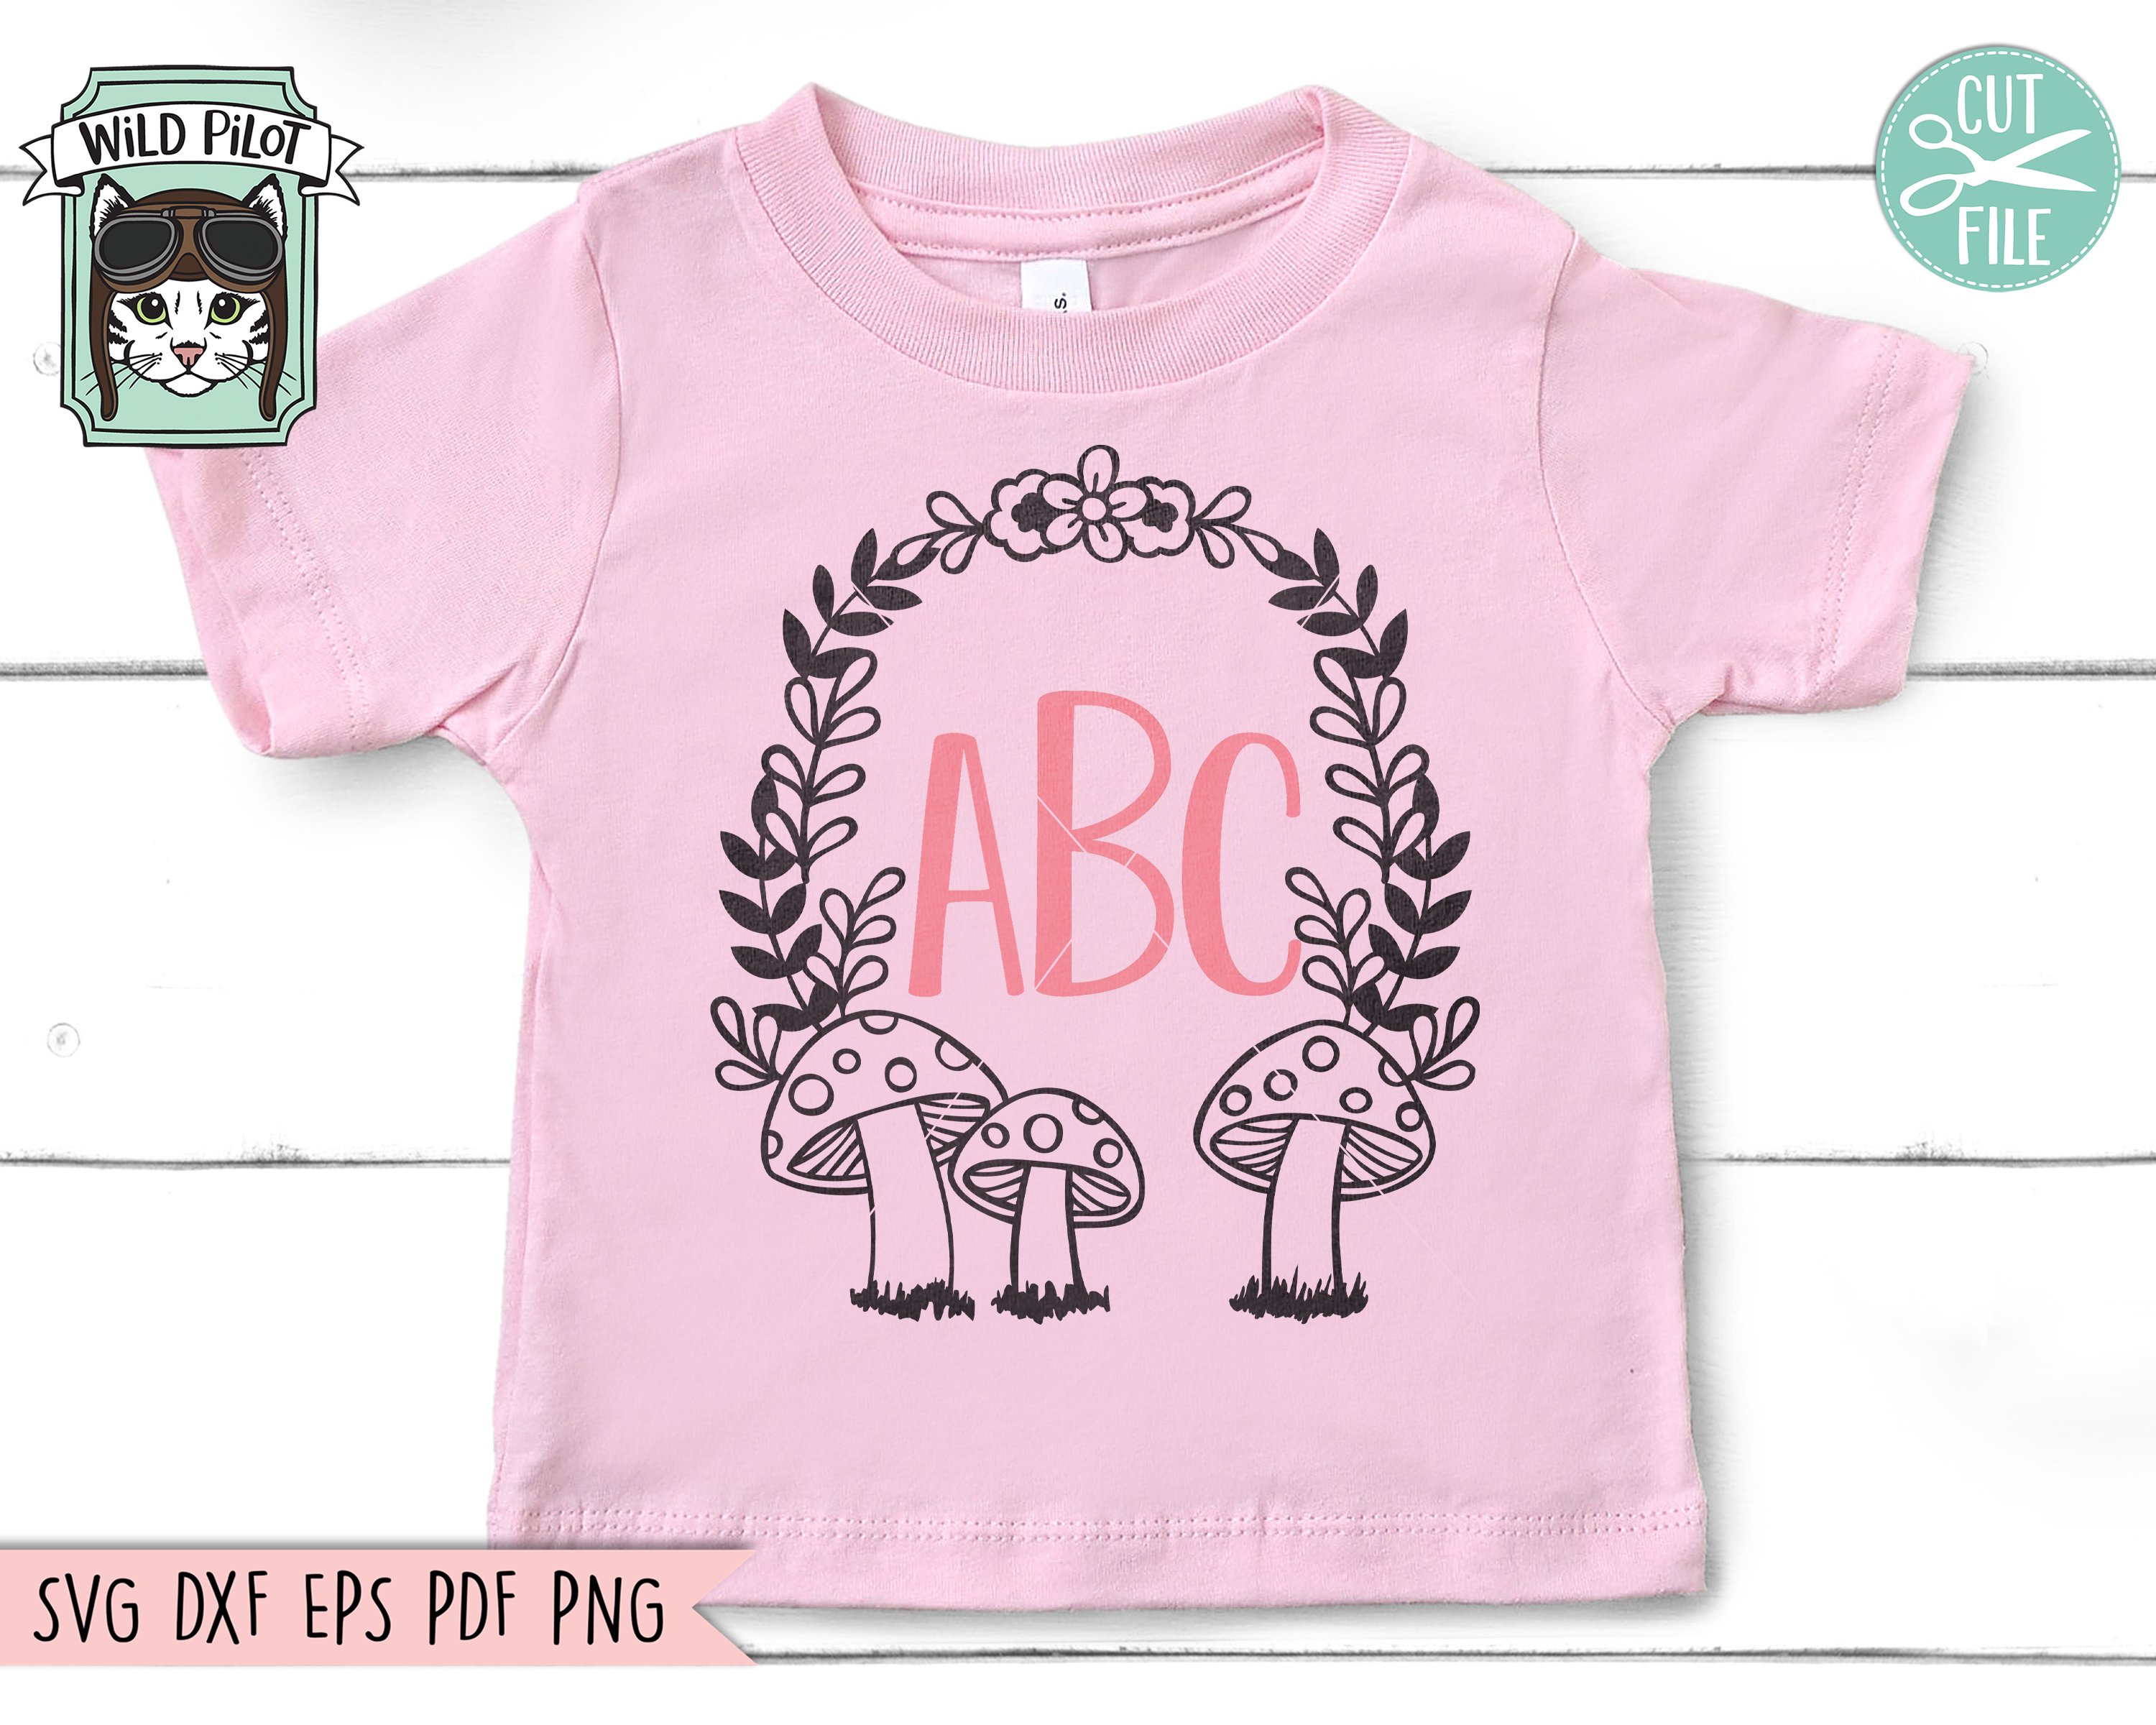 Pink t-shirt with mushroom print.